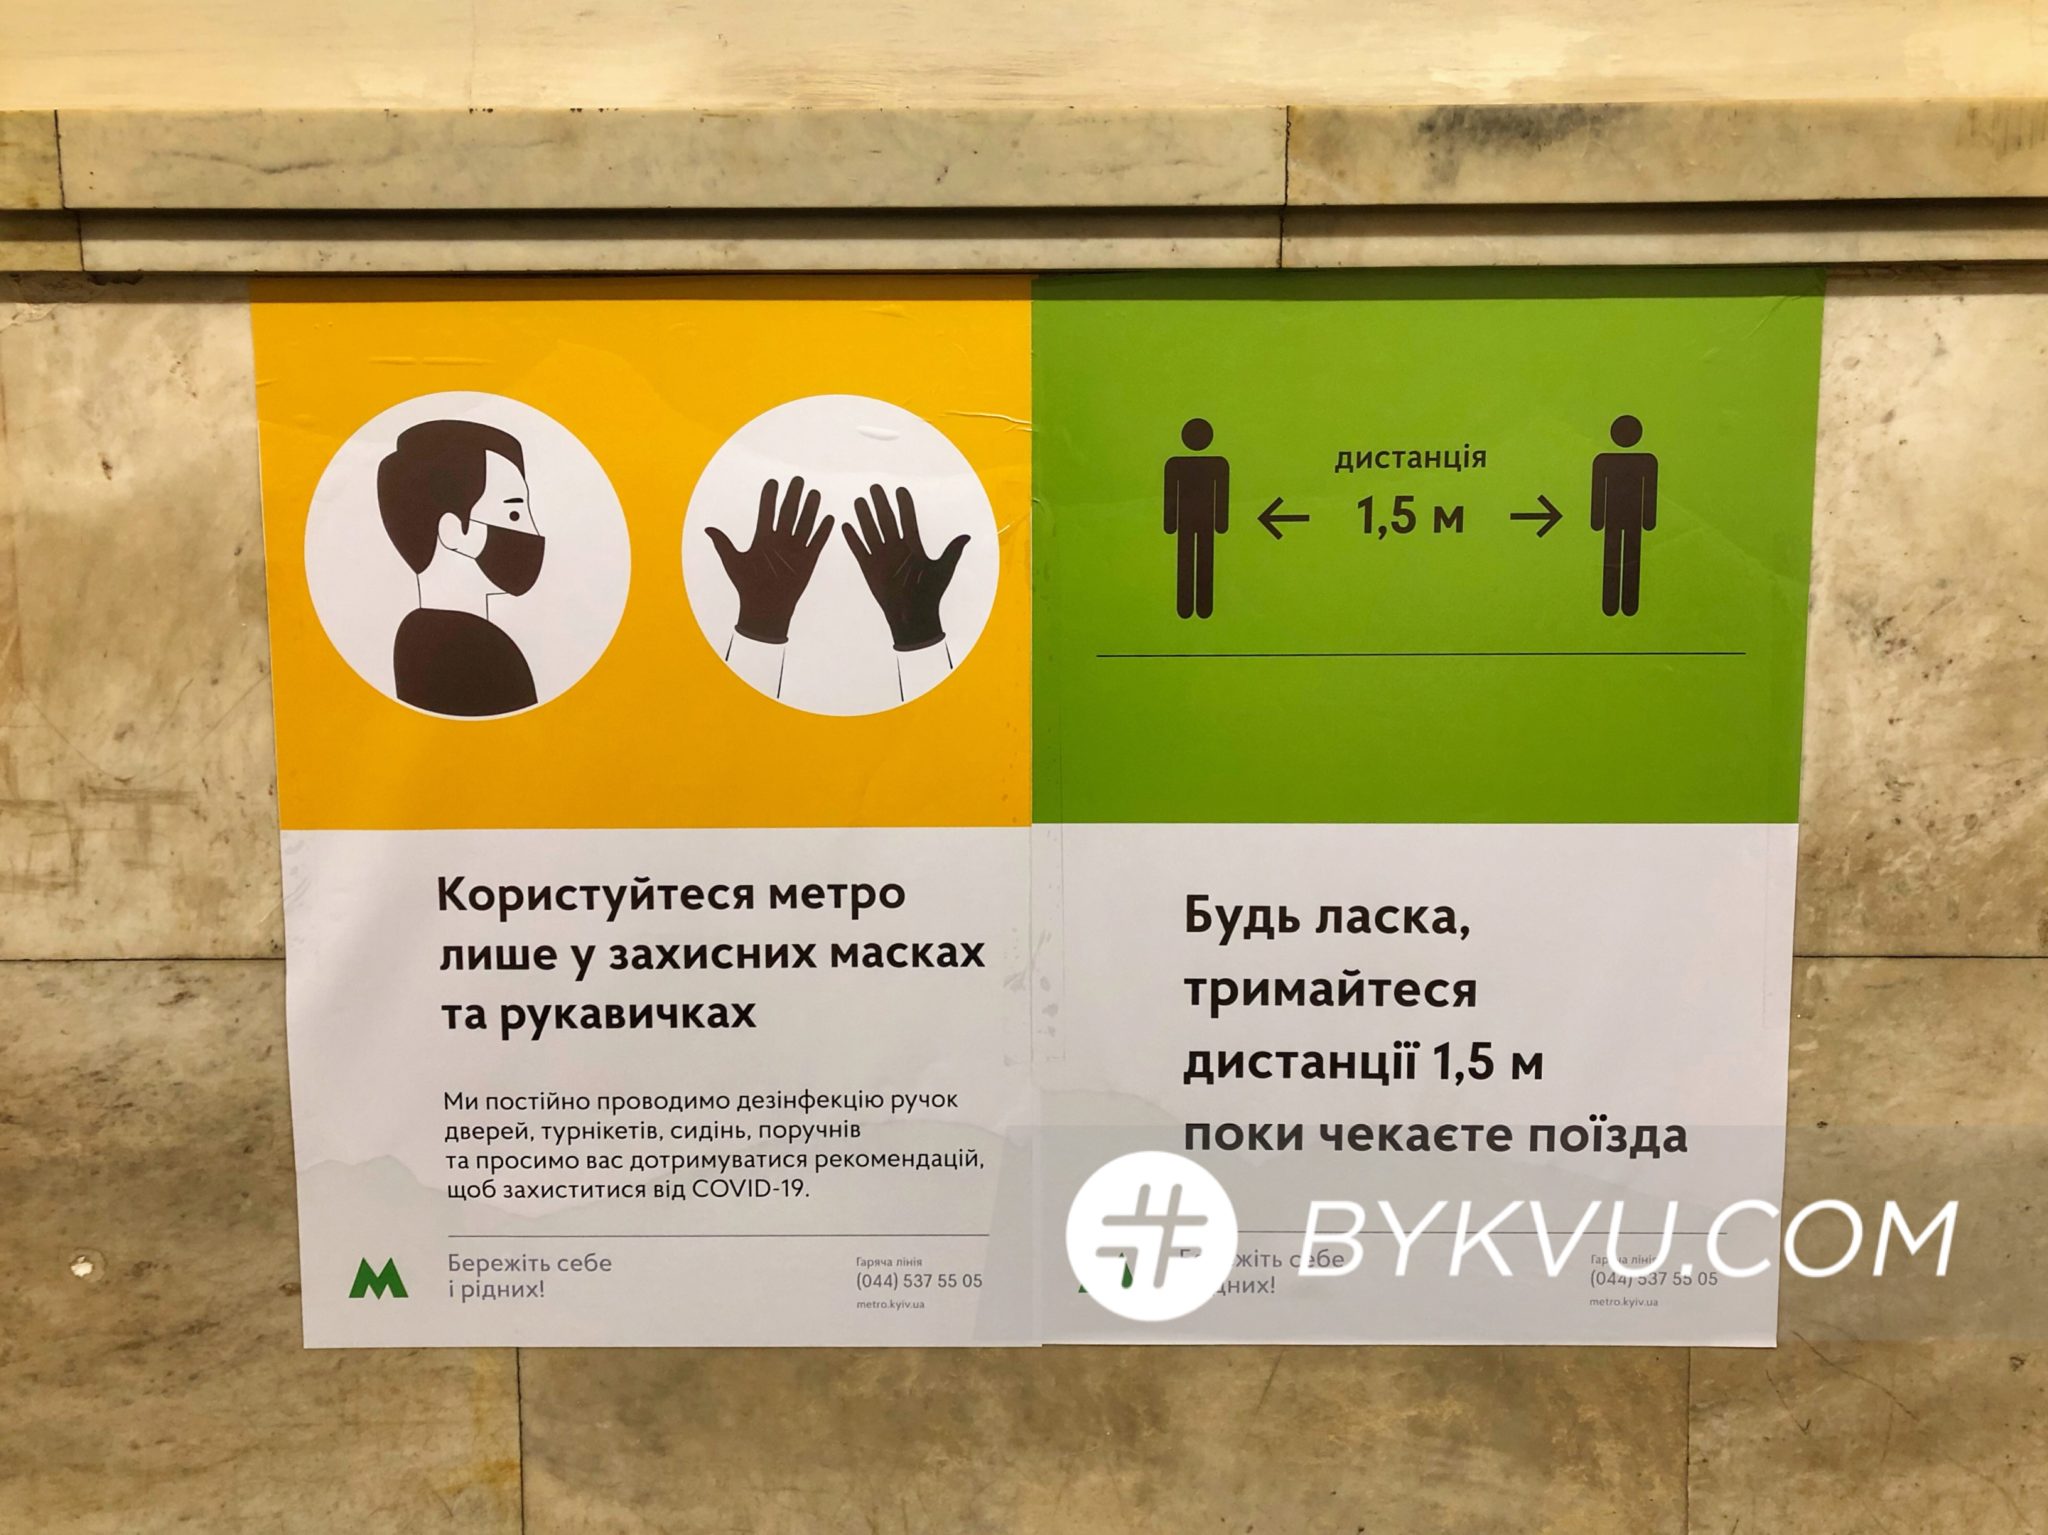 киевское метро_25 мая 2020_карантин